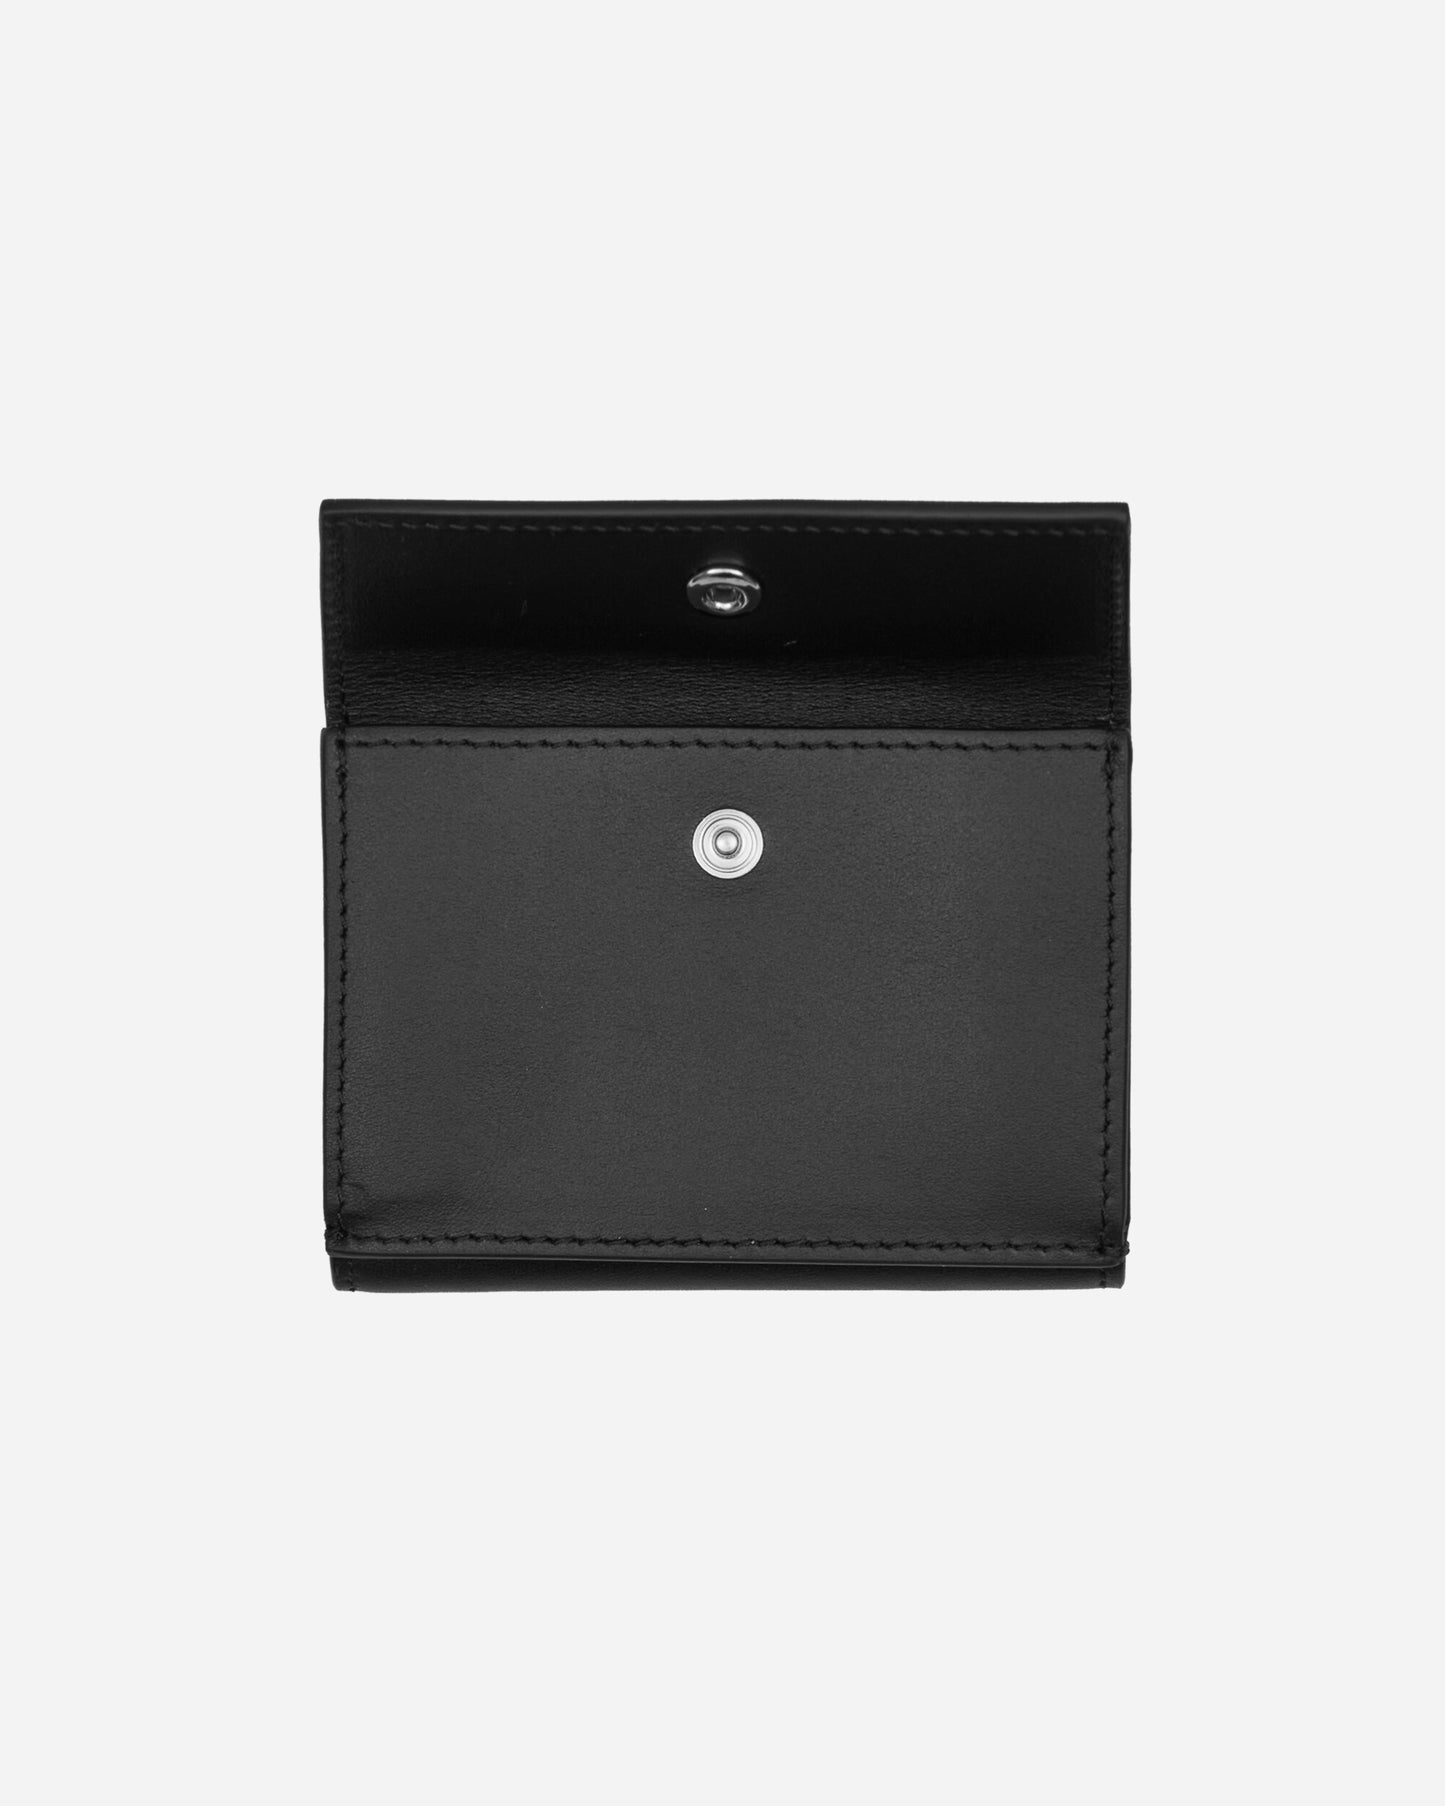 Acne Studios Wallet Black Wallets and Cardholders Wallets CG0221- 900